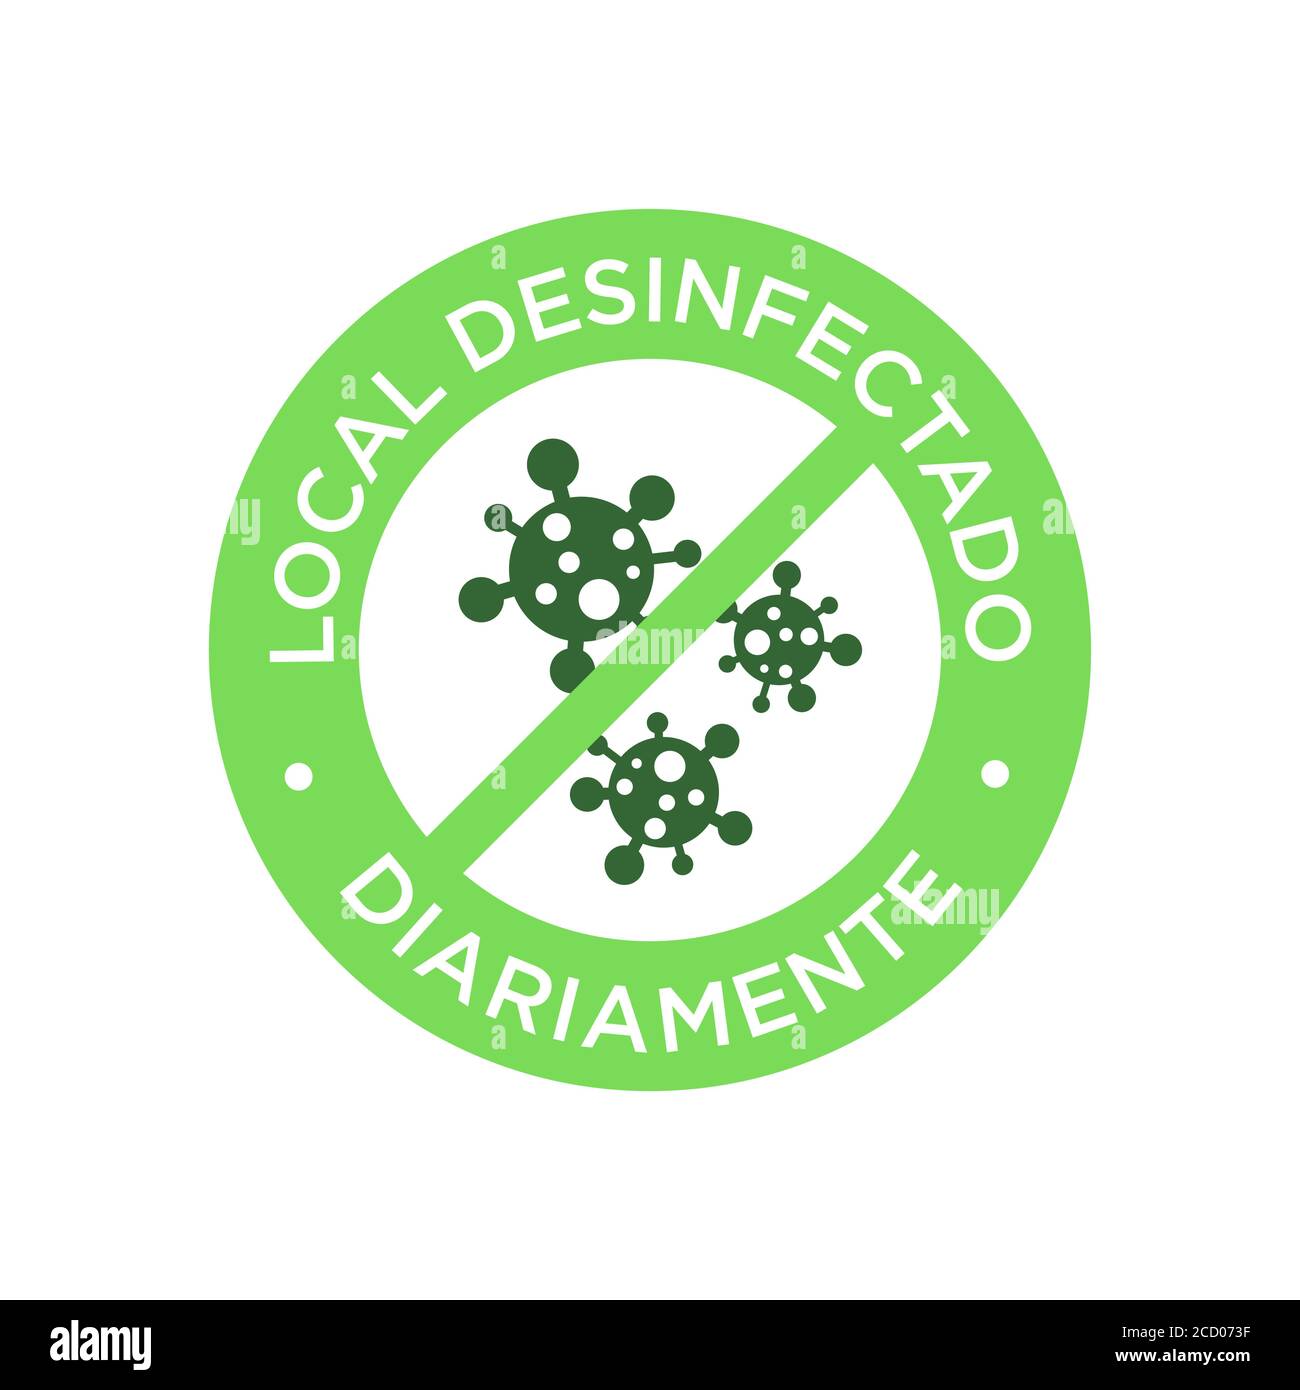 Daily disinfected premises icon written in Spanish. Coronavirus free round symbol. Stock Vector